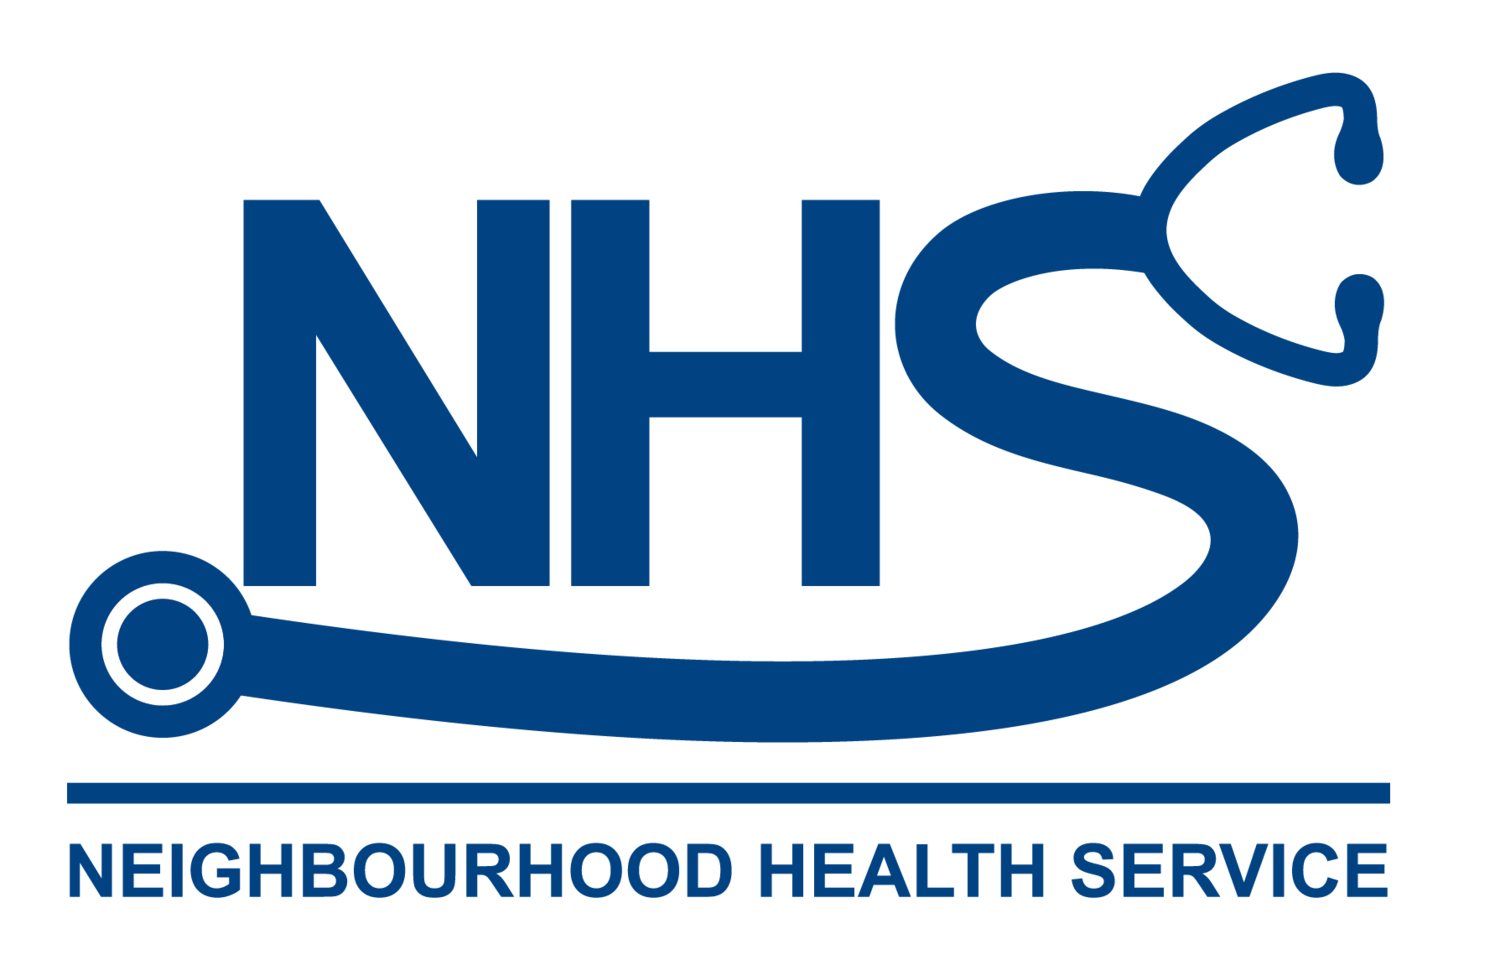 Health Service Logo - Neighbourhood Health Service (NHS)